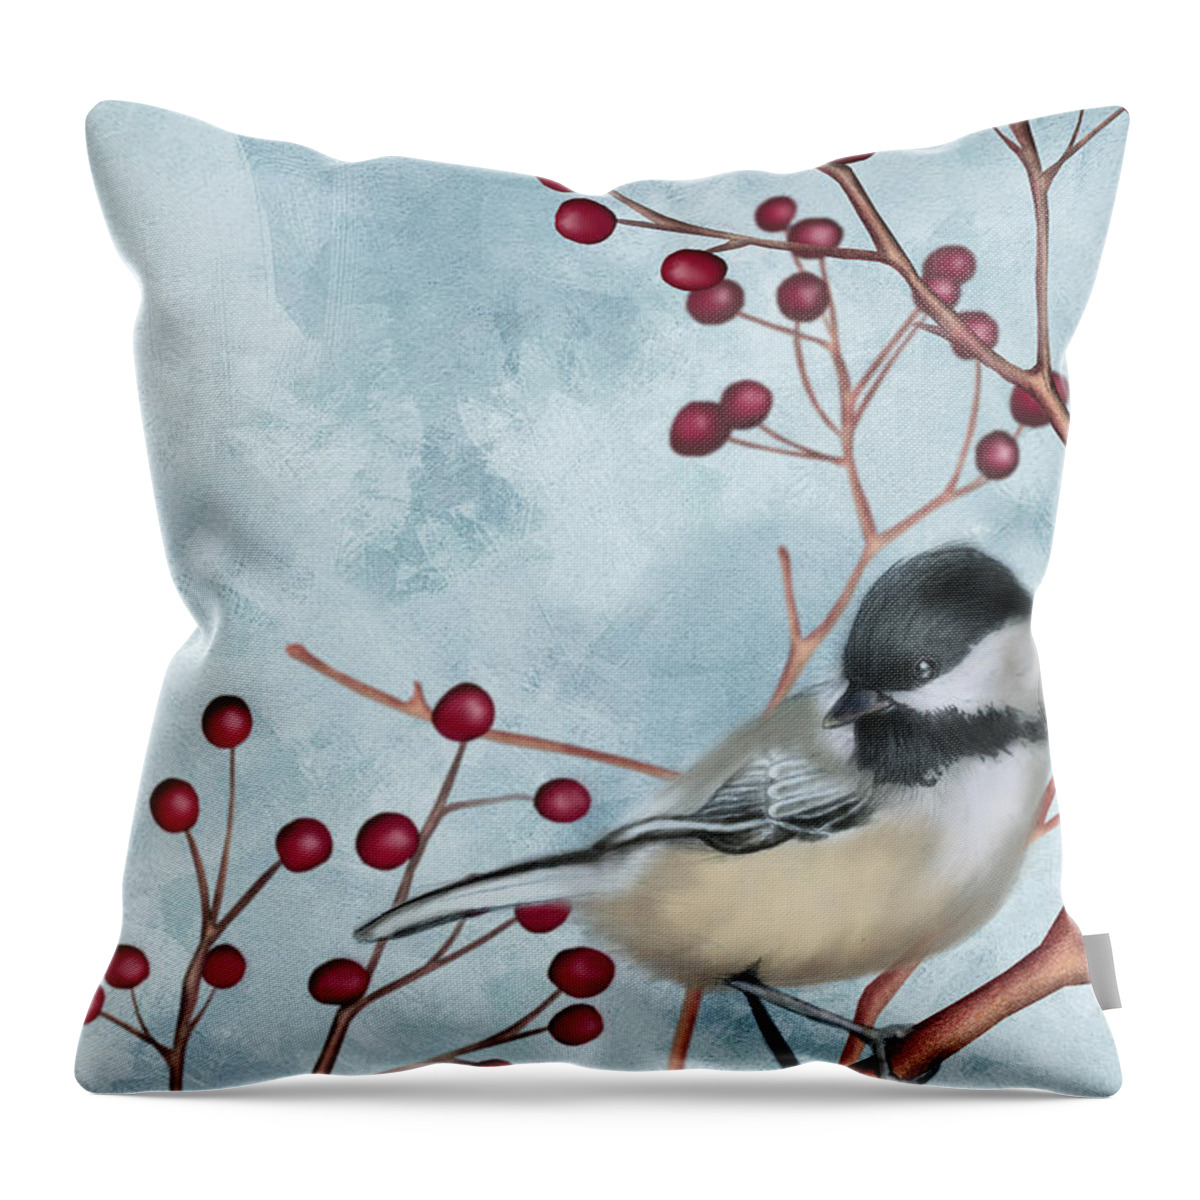 Chickadee Throw Pillow featuring the digital art Chickadee I by April Moen